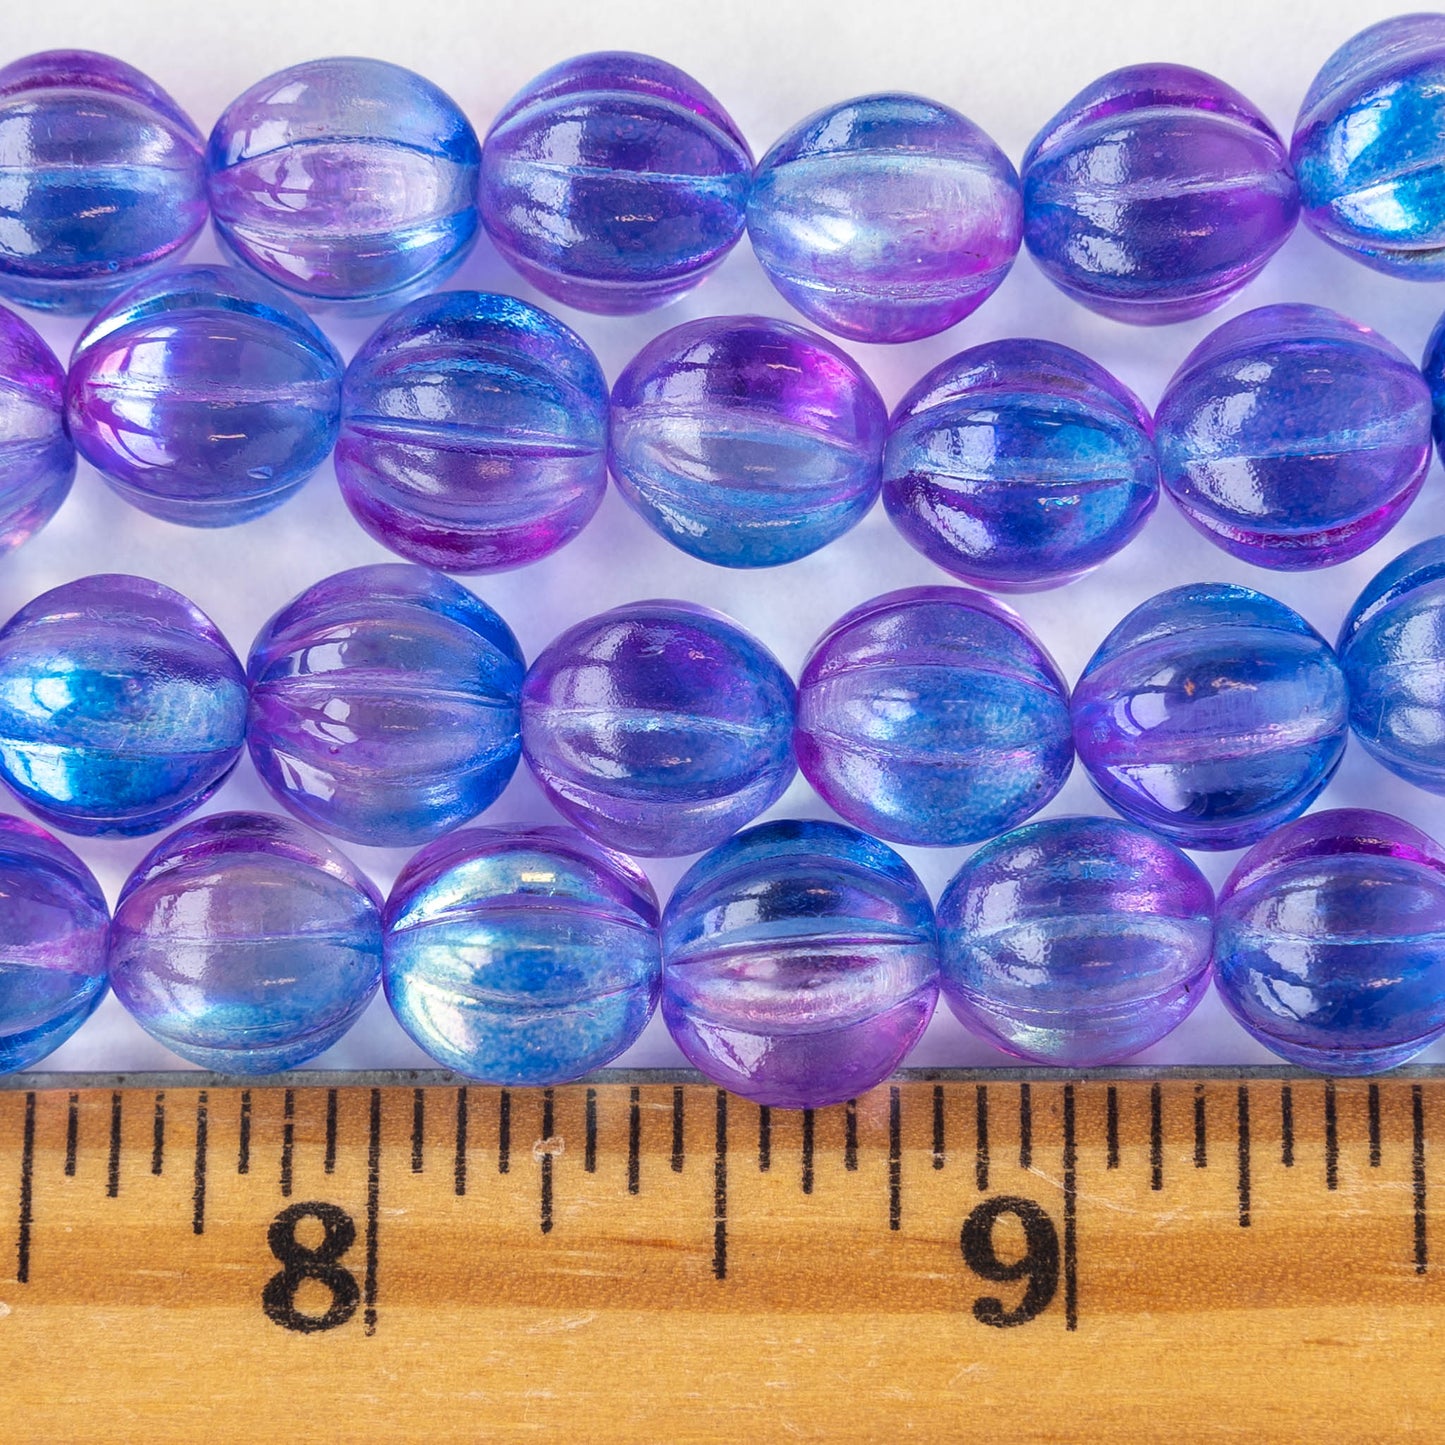 10mm Melon Bead - Blue Purple Mix - 20 Beads